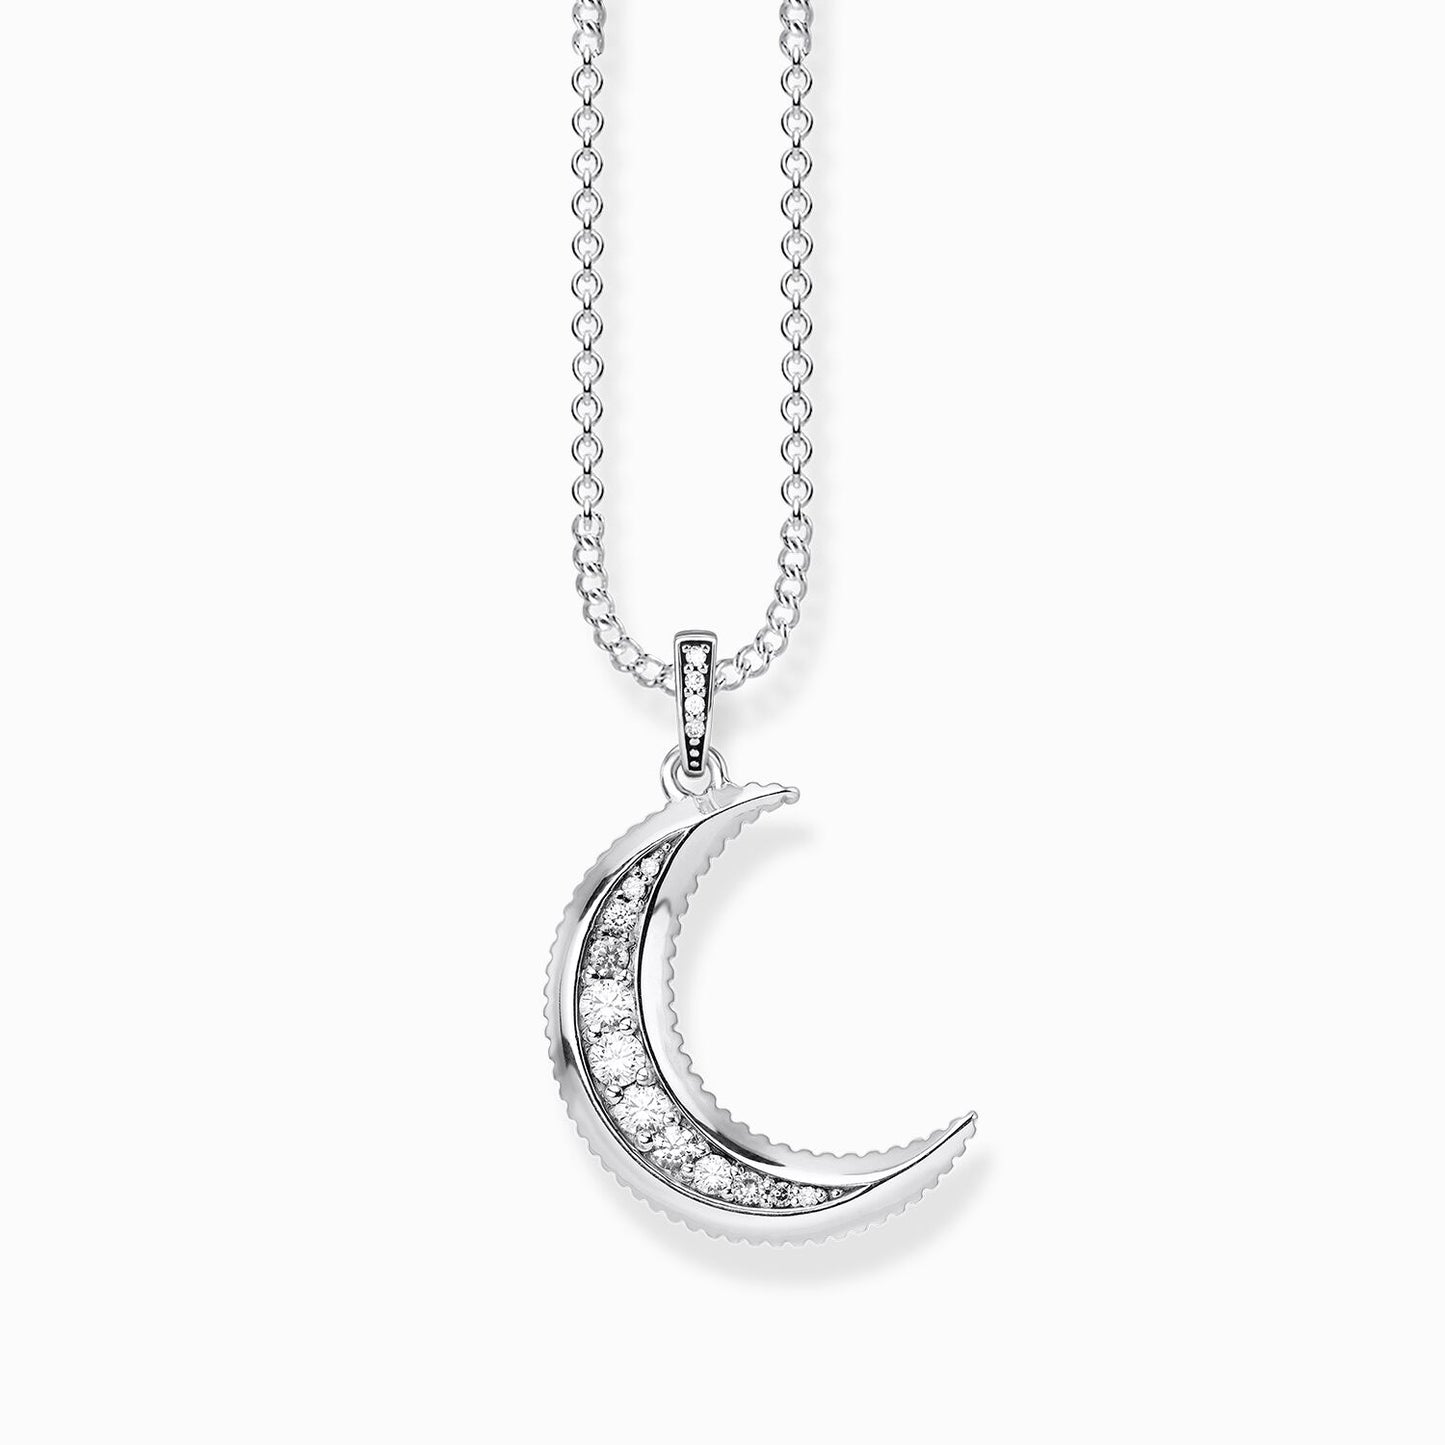 Silver Royalty moon necklace